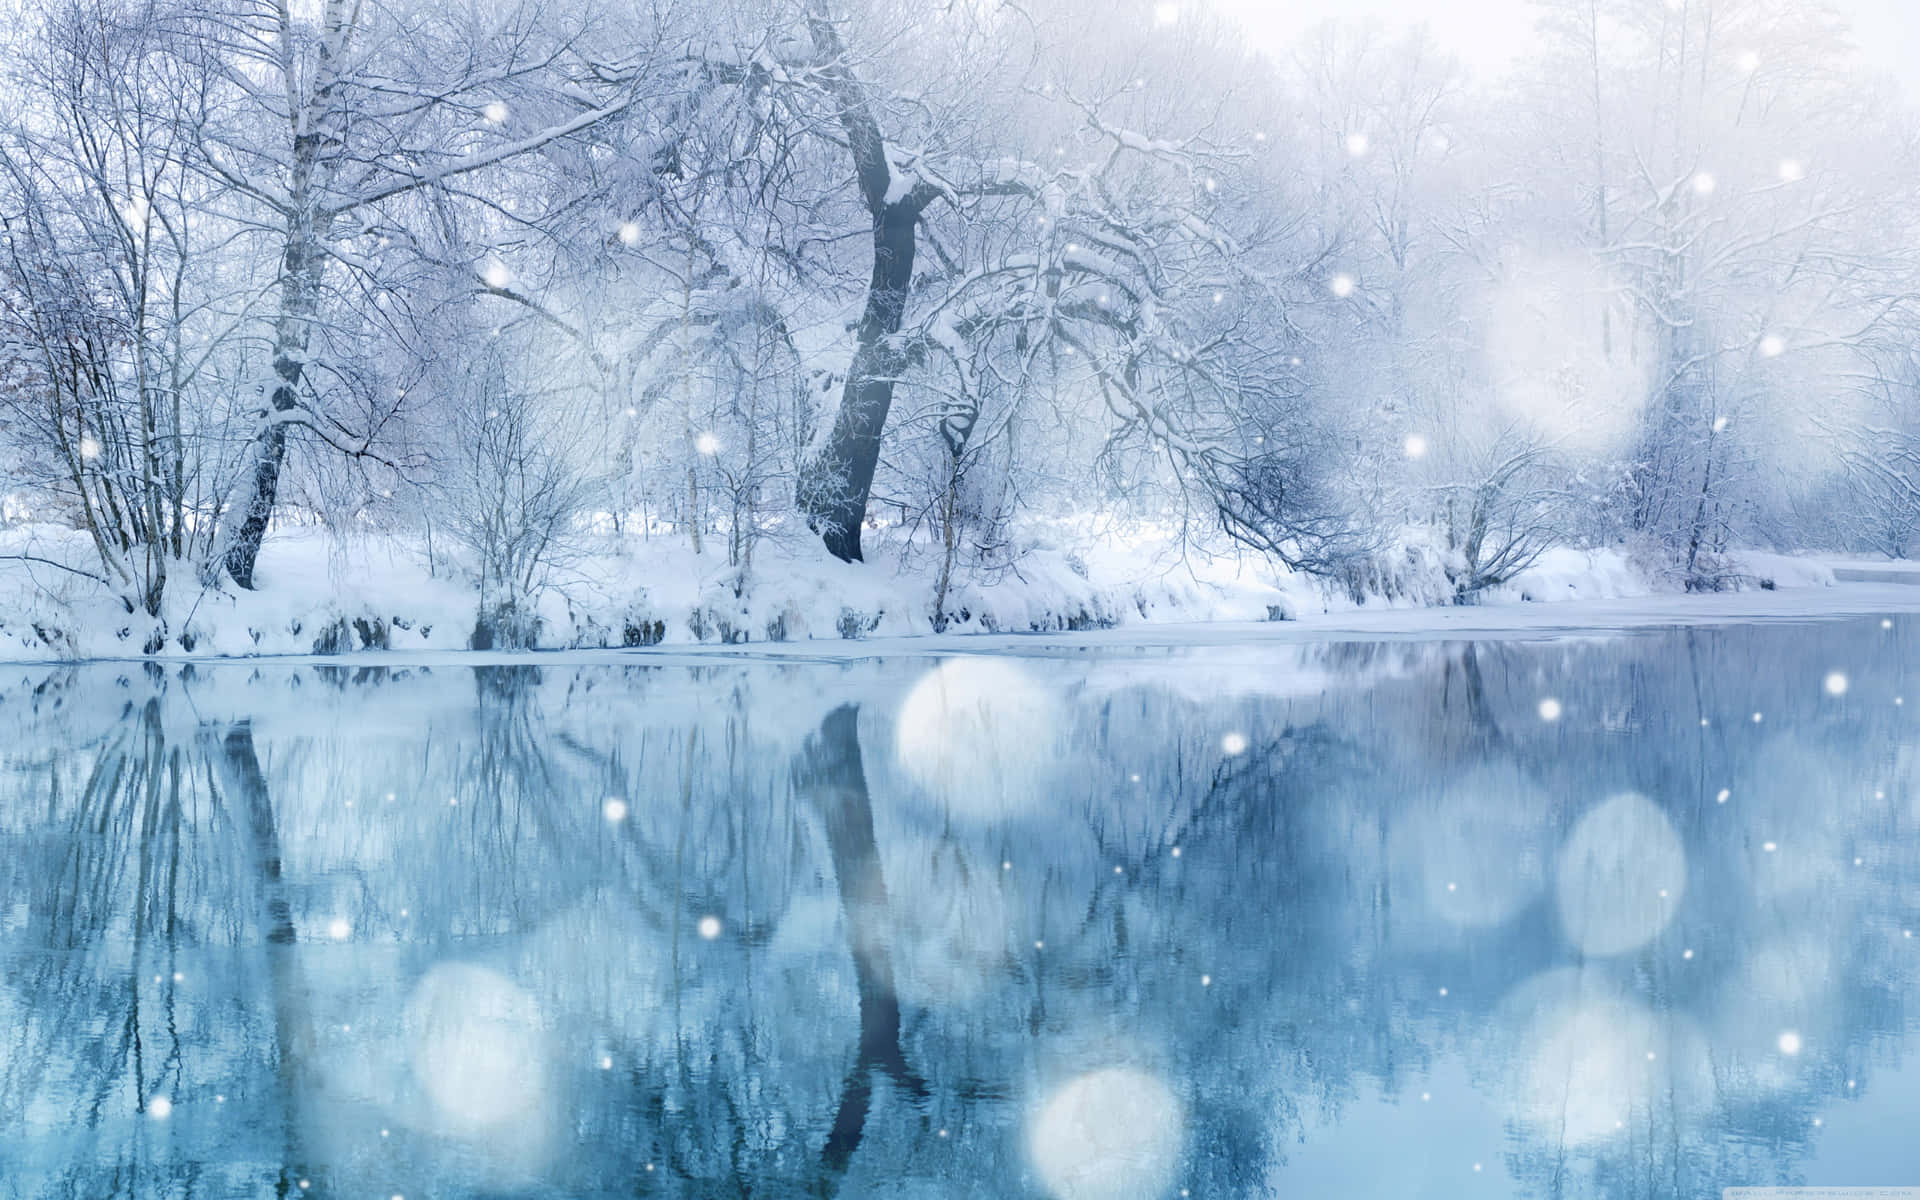 A magical winter landscape under a dreamy snowfall Wallpaper